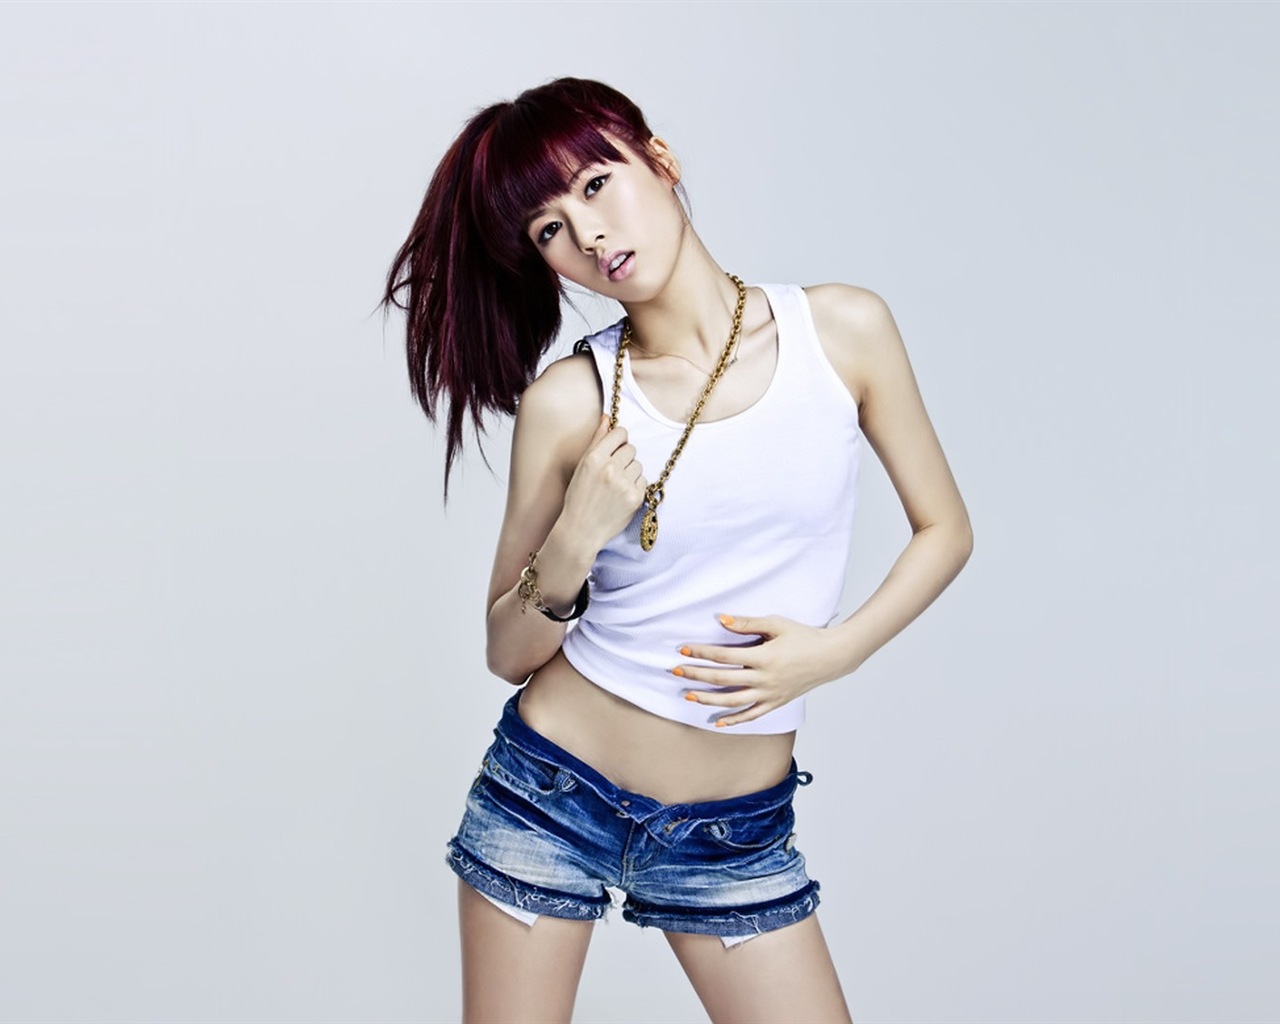 4Minute Korean music beautiful girls combination HD wallpapers #11 - 1280x1024